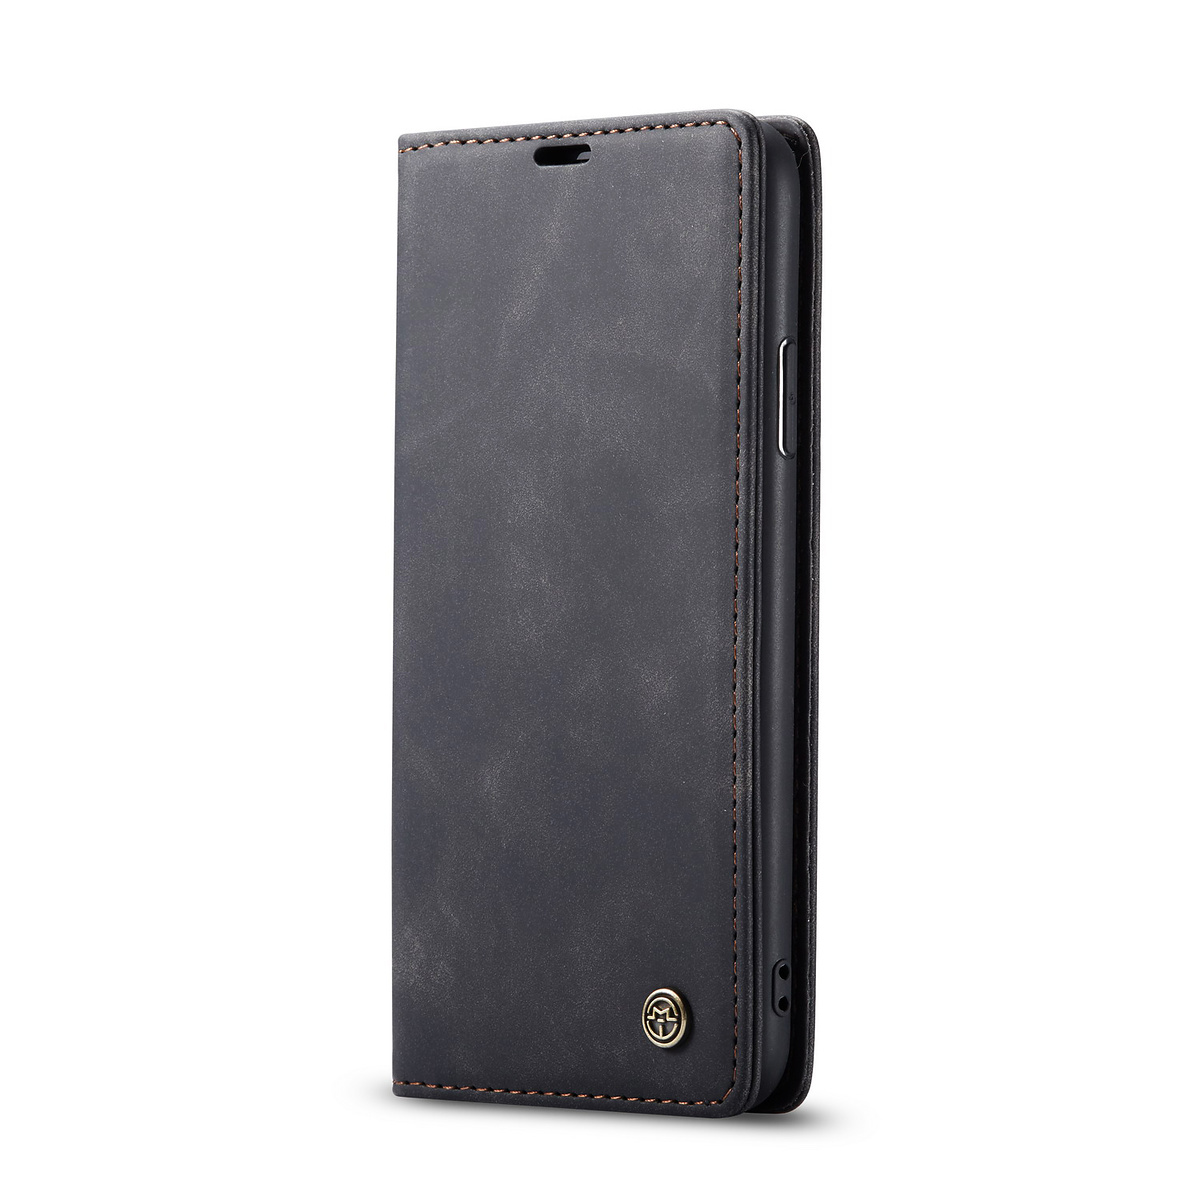 CaseMe plånboksfodral, iPhone 11 Pro Max, svart